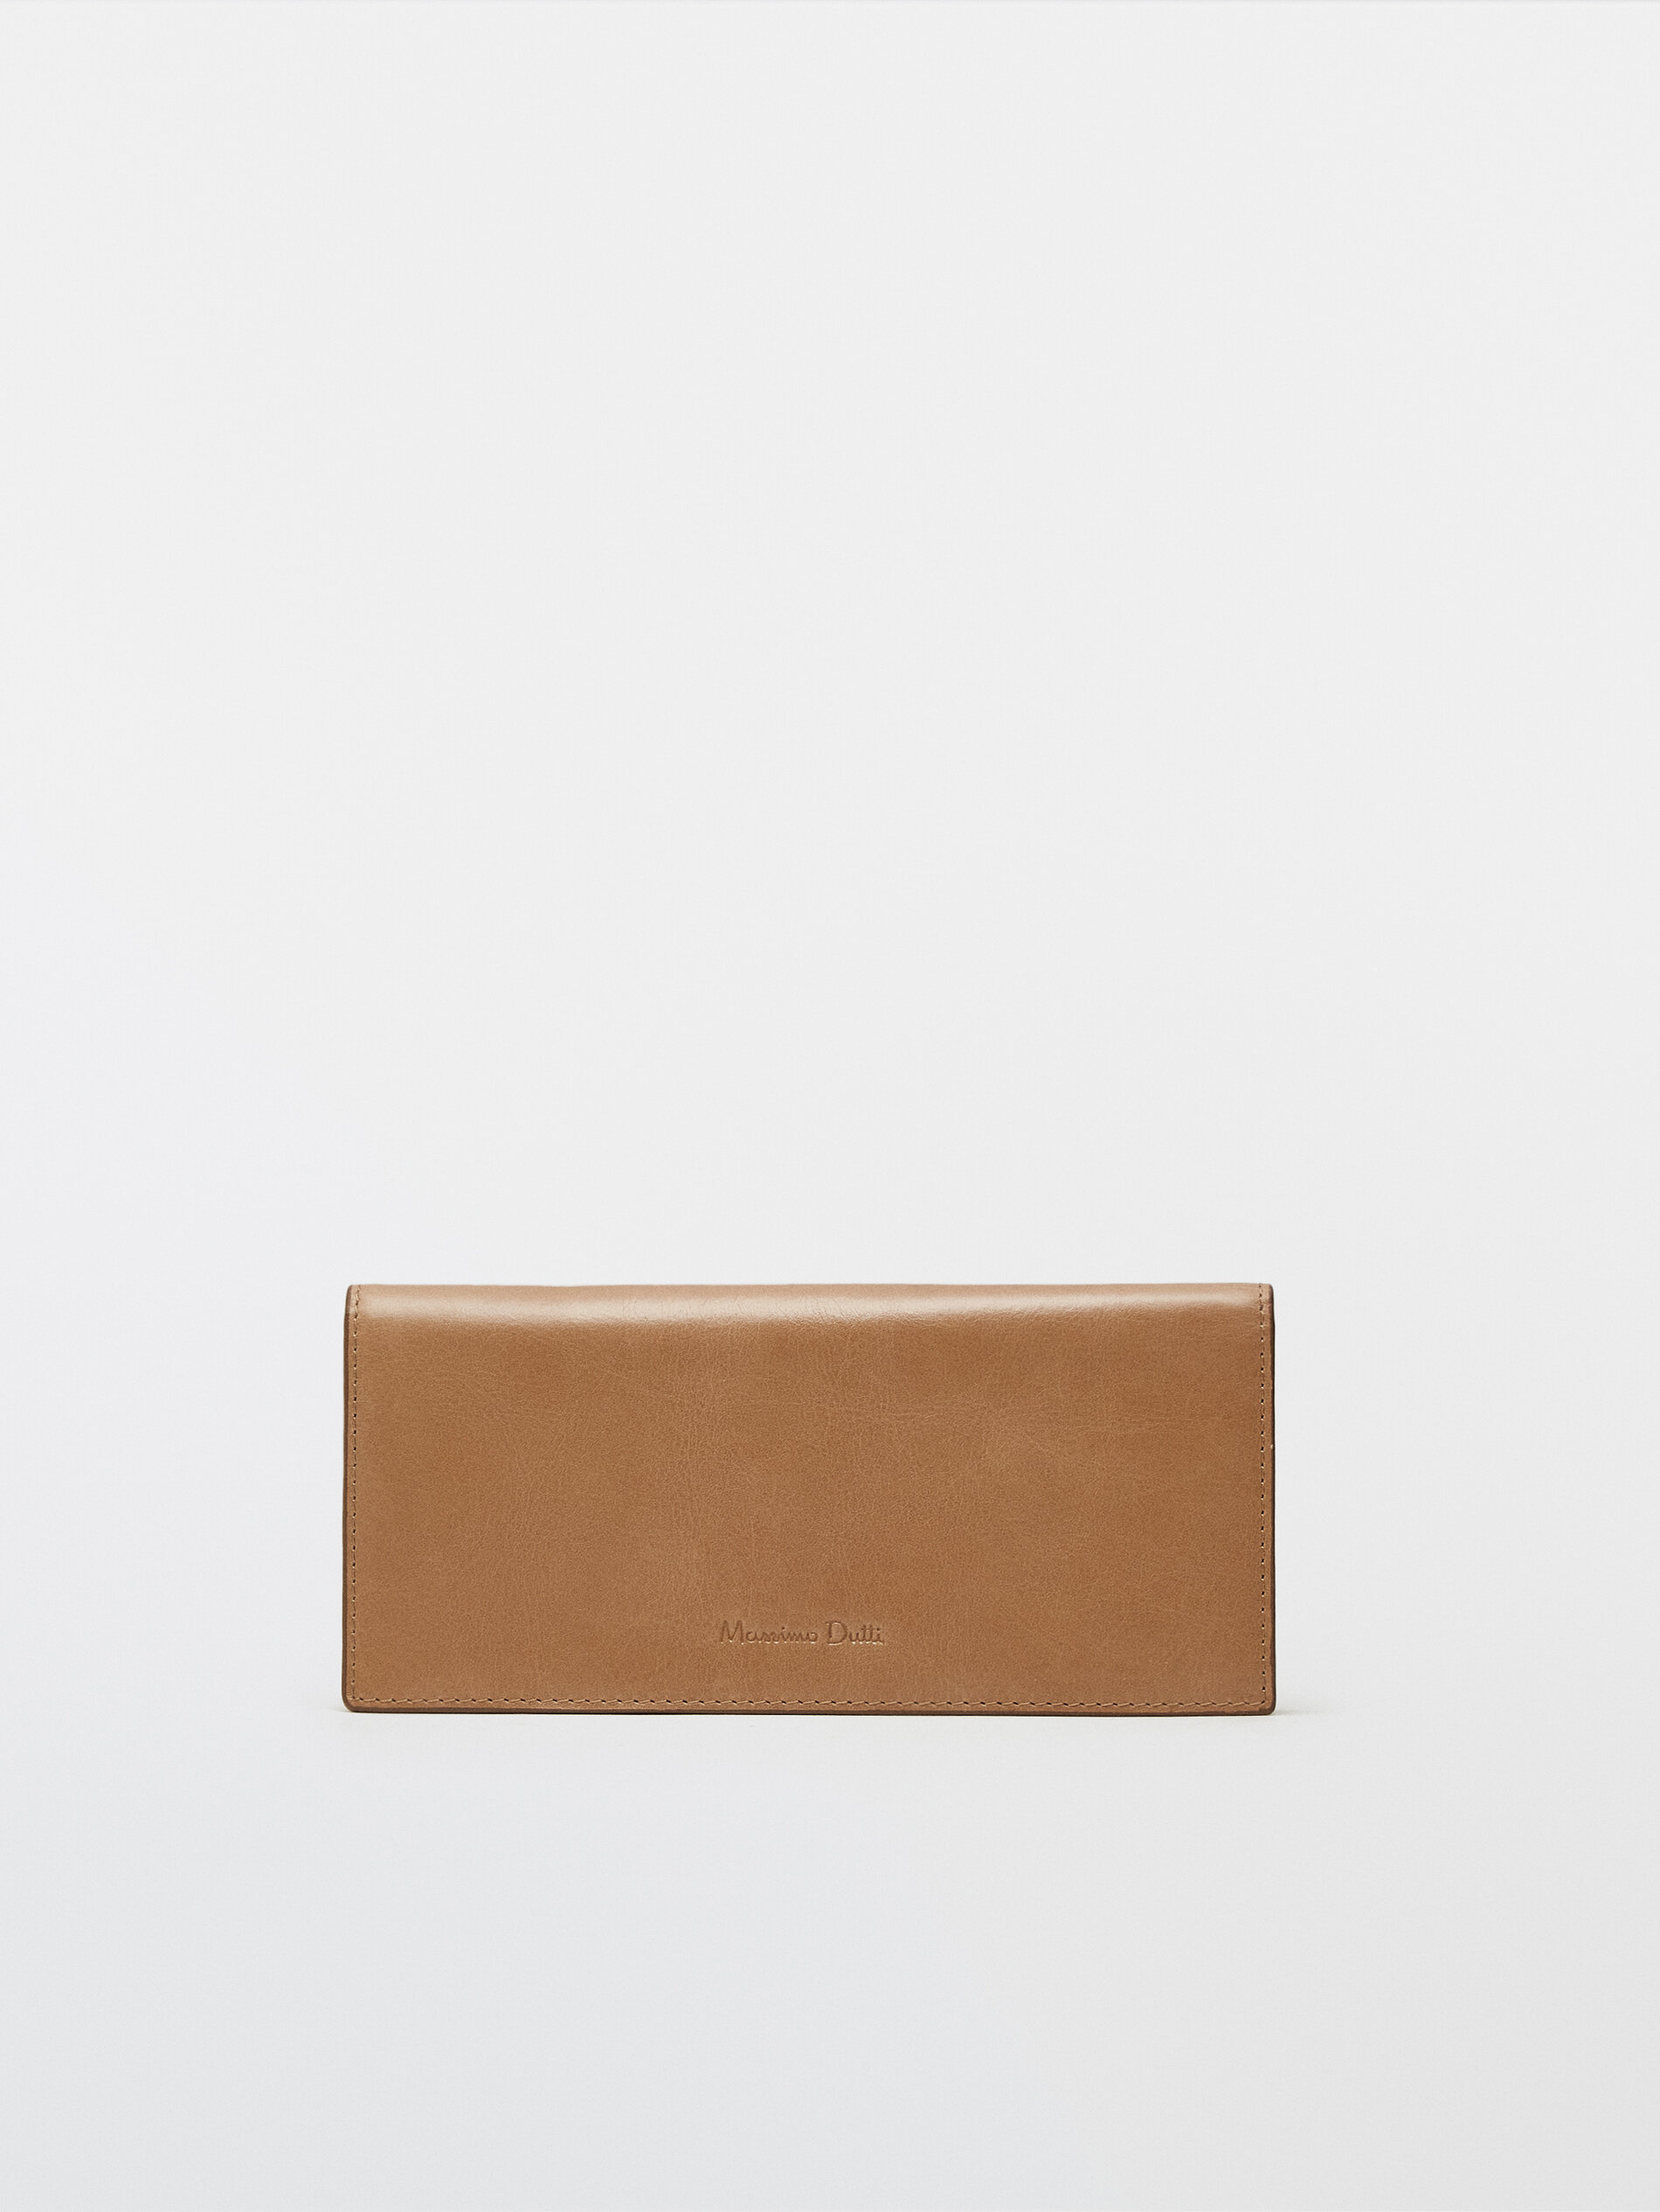 Massimo Dutti Leather Wallet - Big Apple Buddy